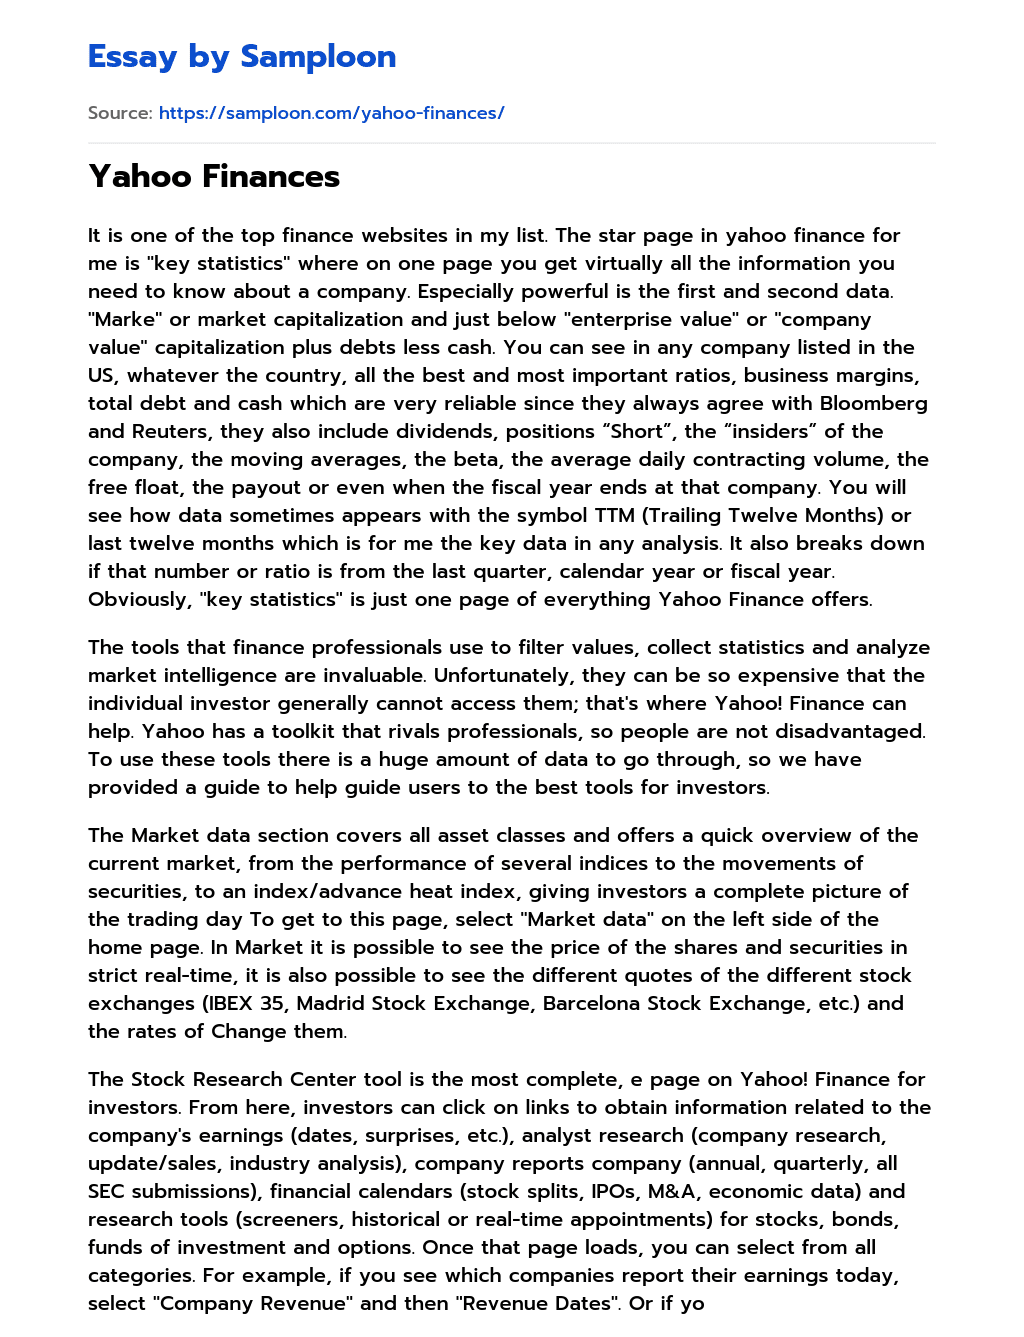 Yahoo Finances essay